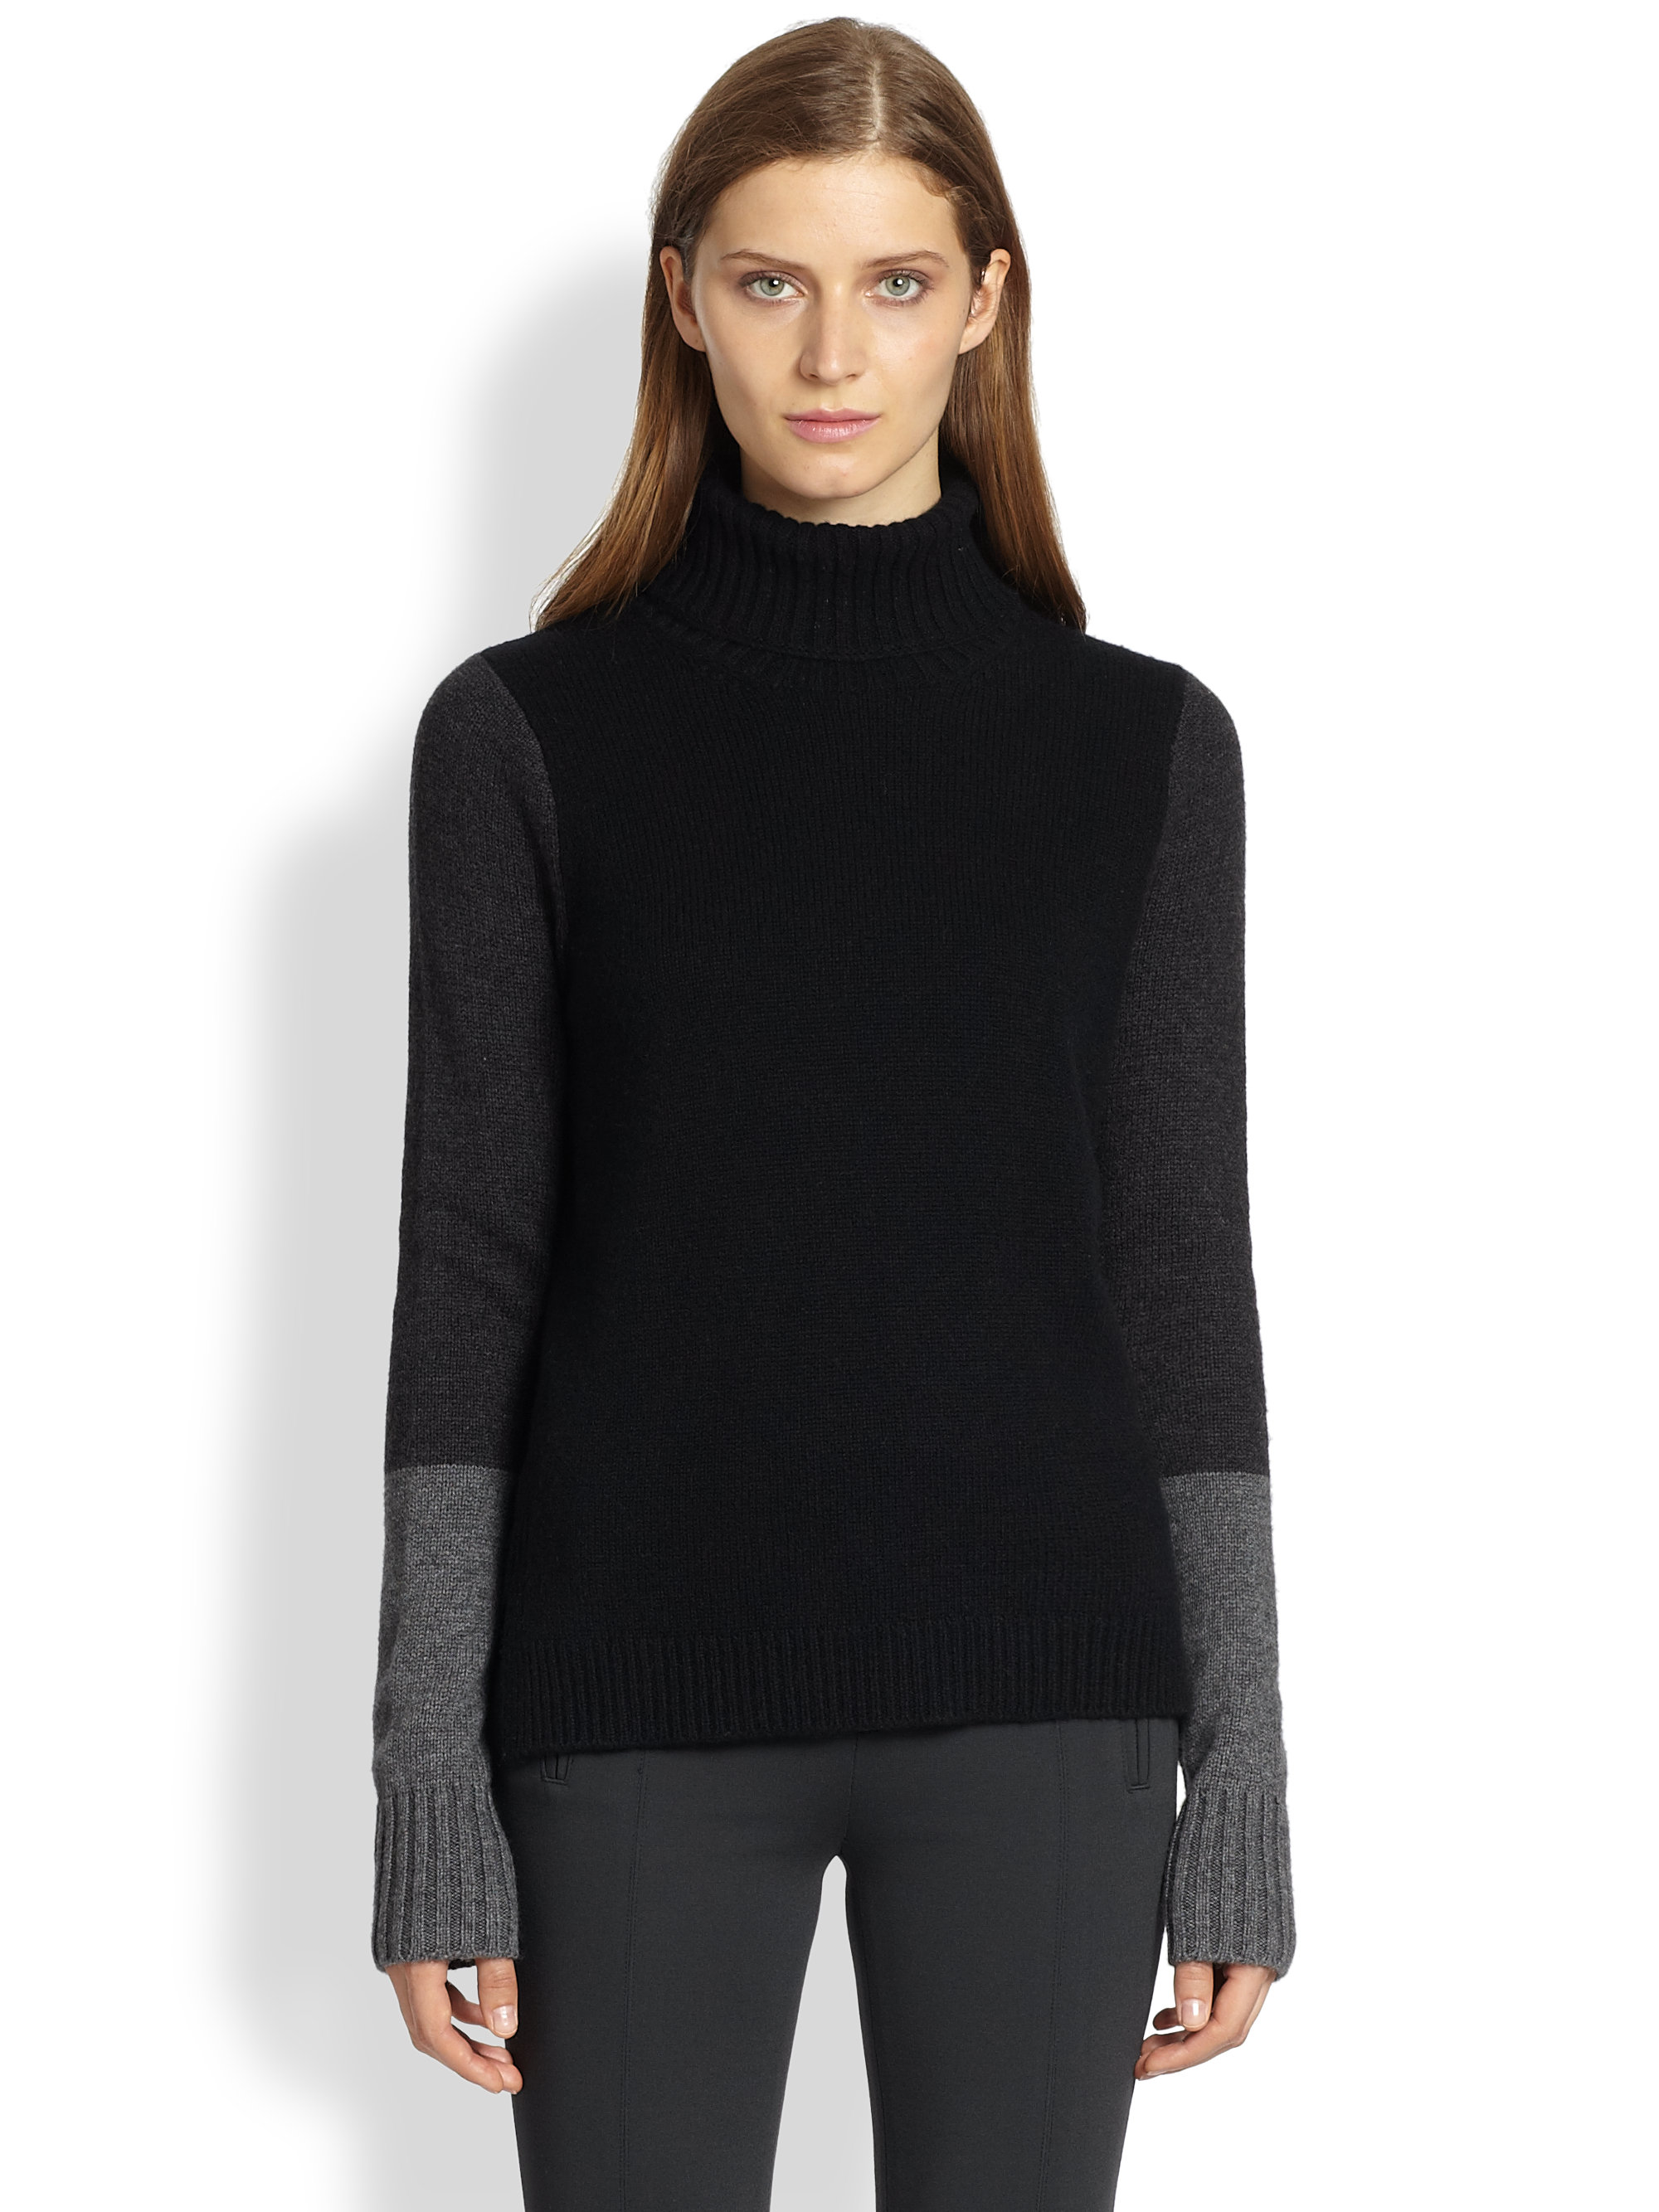 Lyst - Vince Wool Cashmere Colorblock Turtleneck Sweater in Black